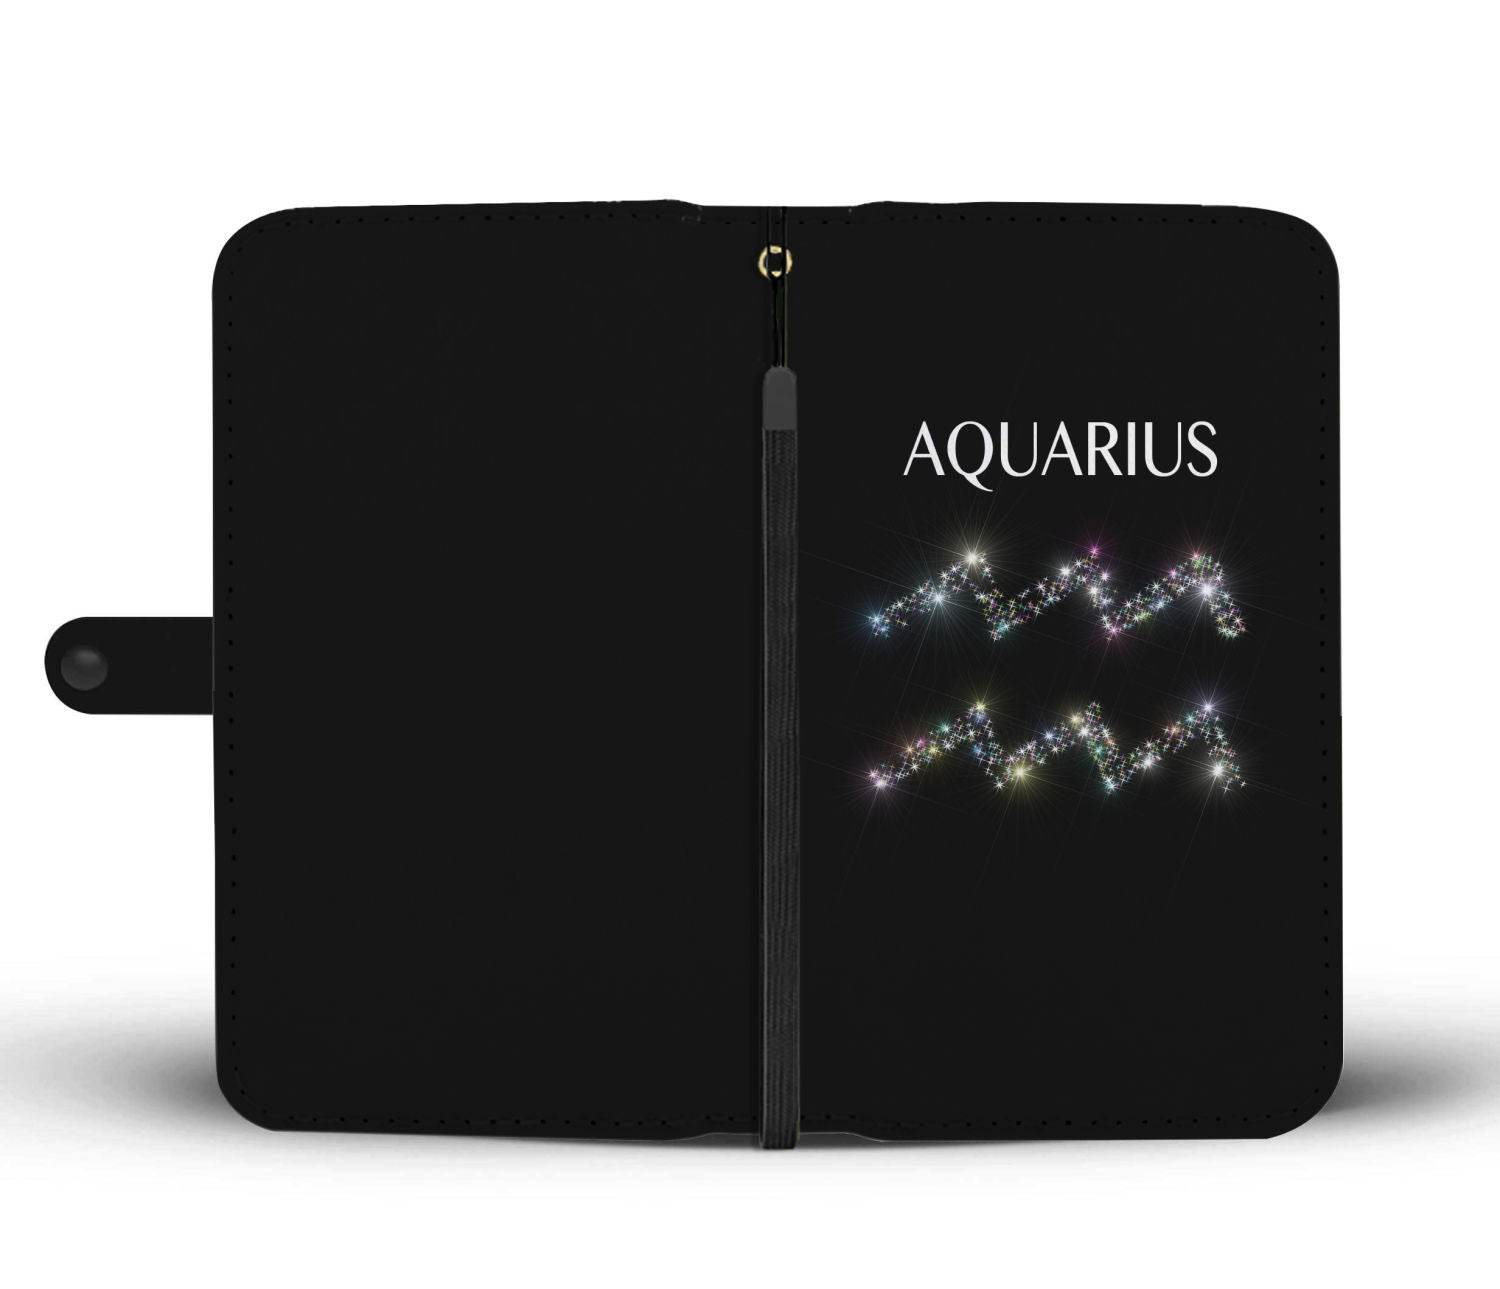 Aquarius Stars Phone Wallet